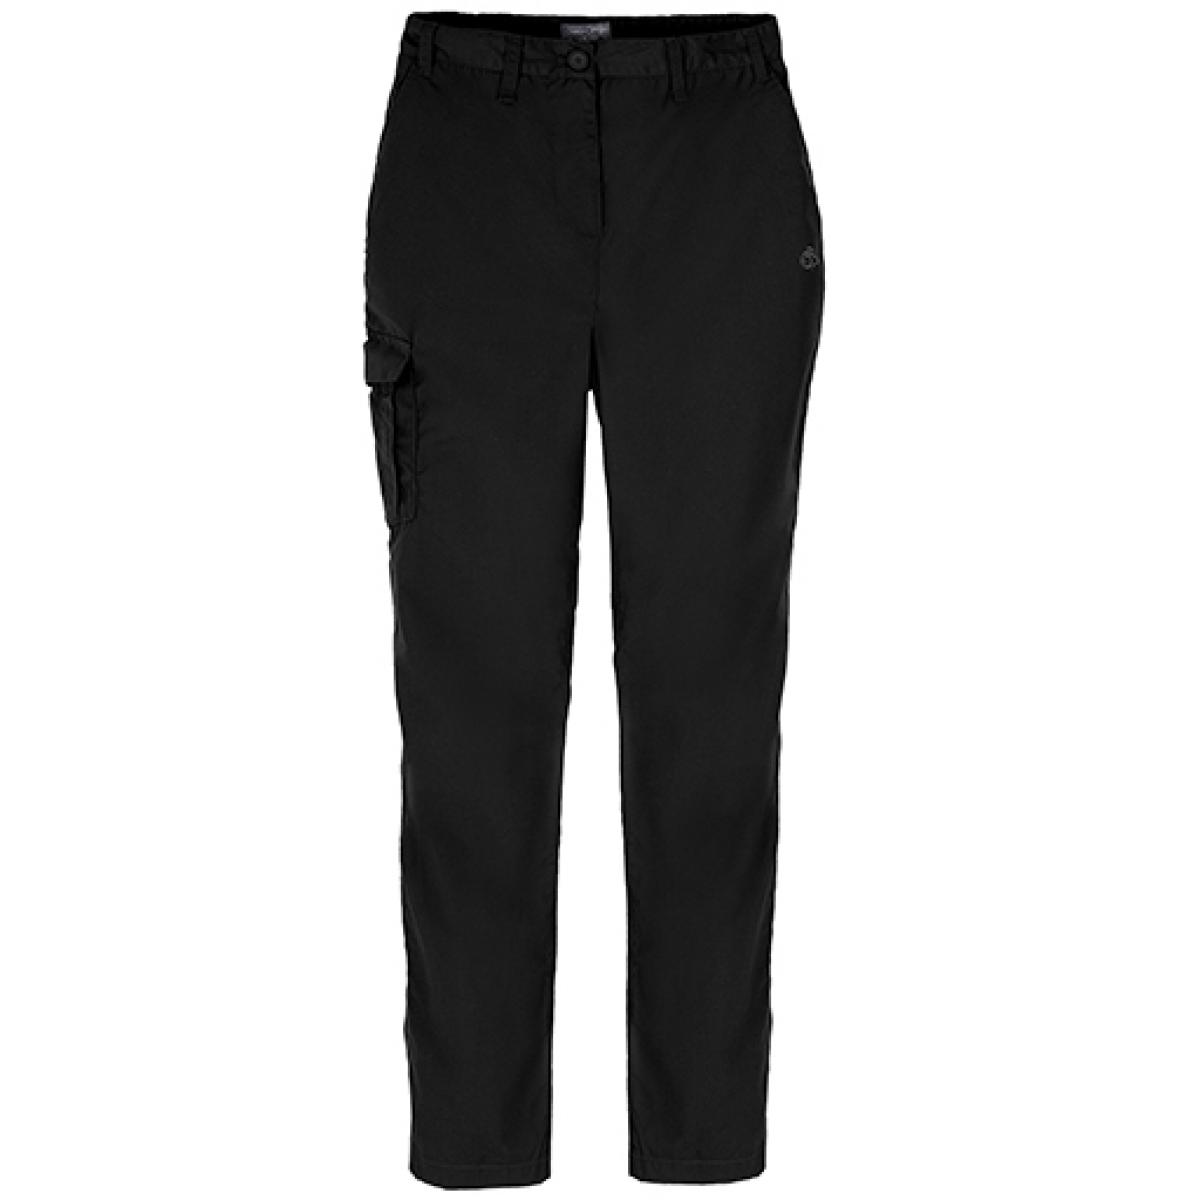 Hersteller: Craghoppers Expert Herstellernummer: CEJ002 Artikelbezeichnung: Expert Womens Kiwi Trousers - Damenhose Farbe: Black